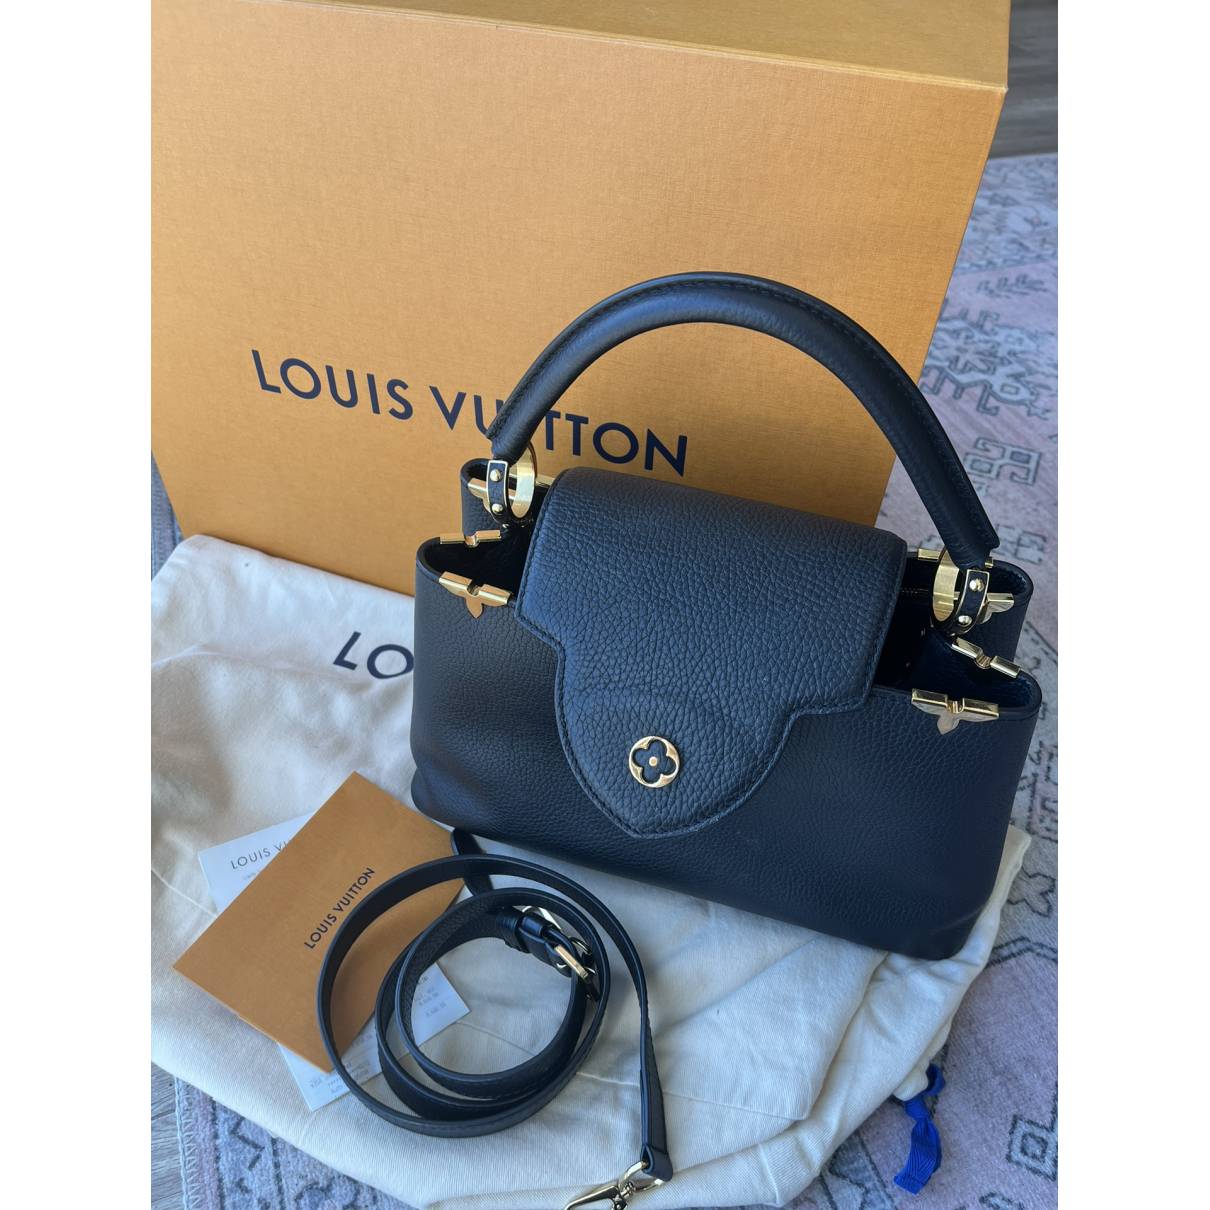 Louis Vuitton - Authenticated Capucines Handbag - Leather Black Plain for Women, Very Good Condition